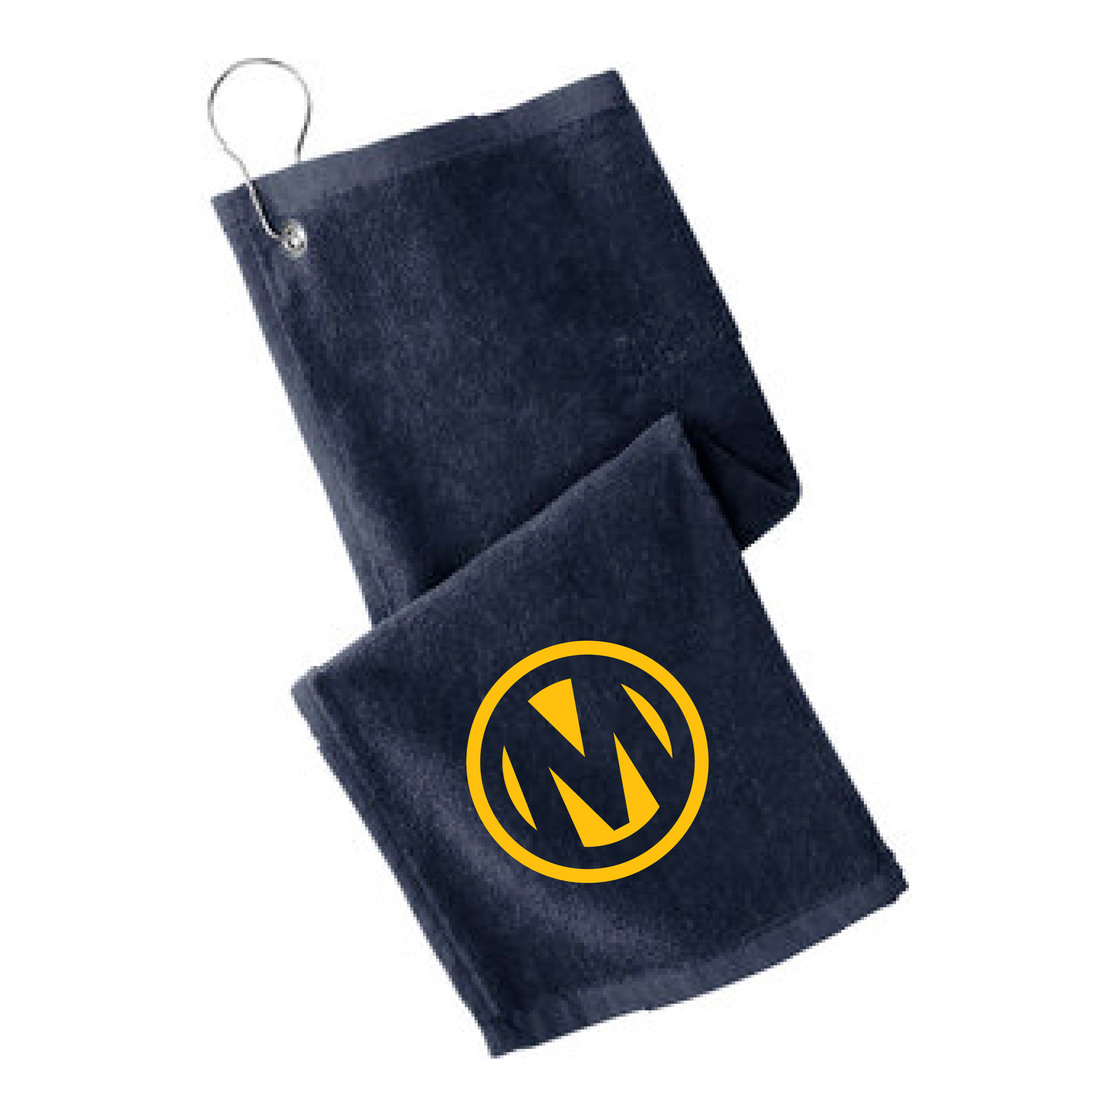 Manheim Charlotte Golf Shoe Bag & Towel